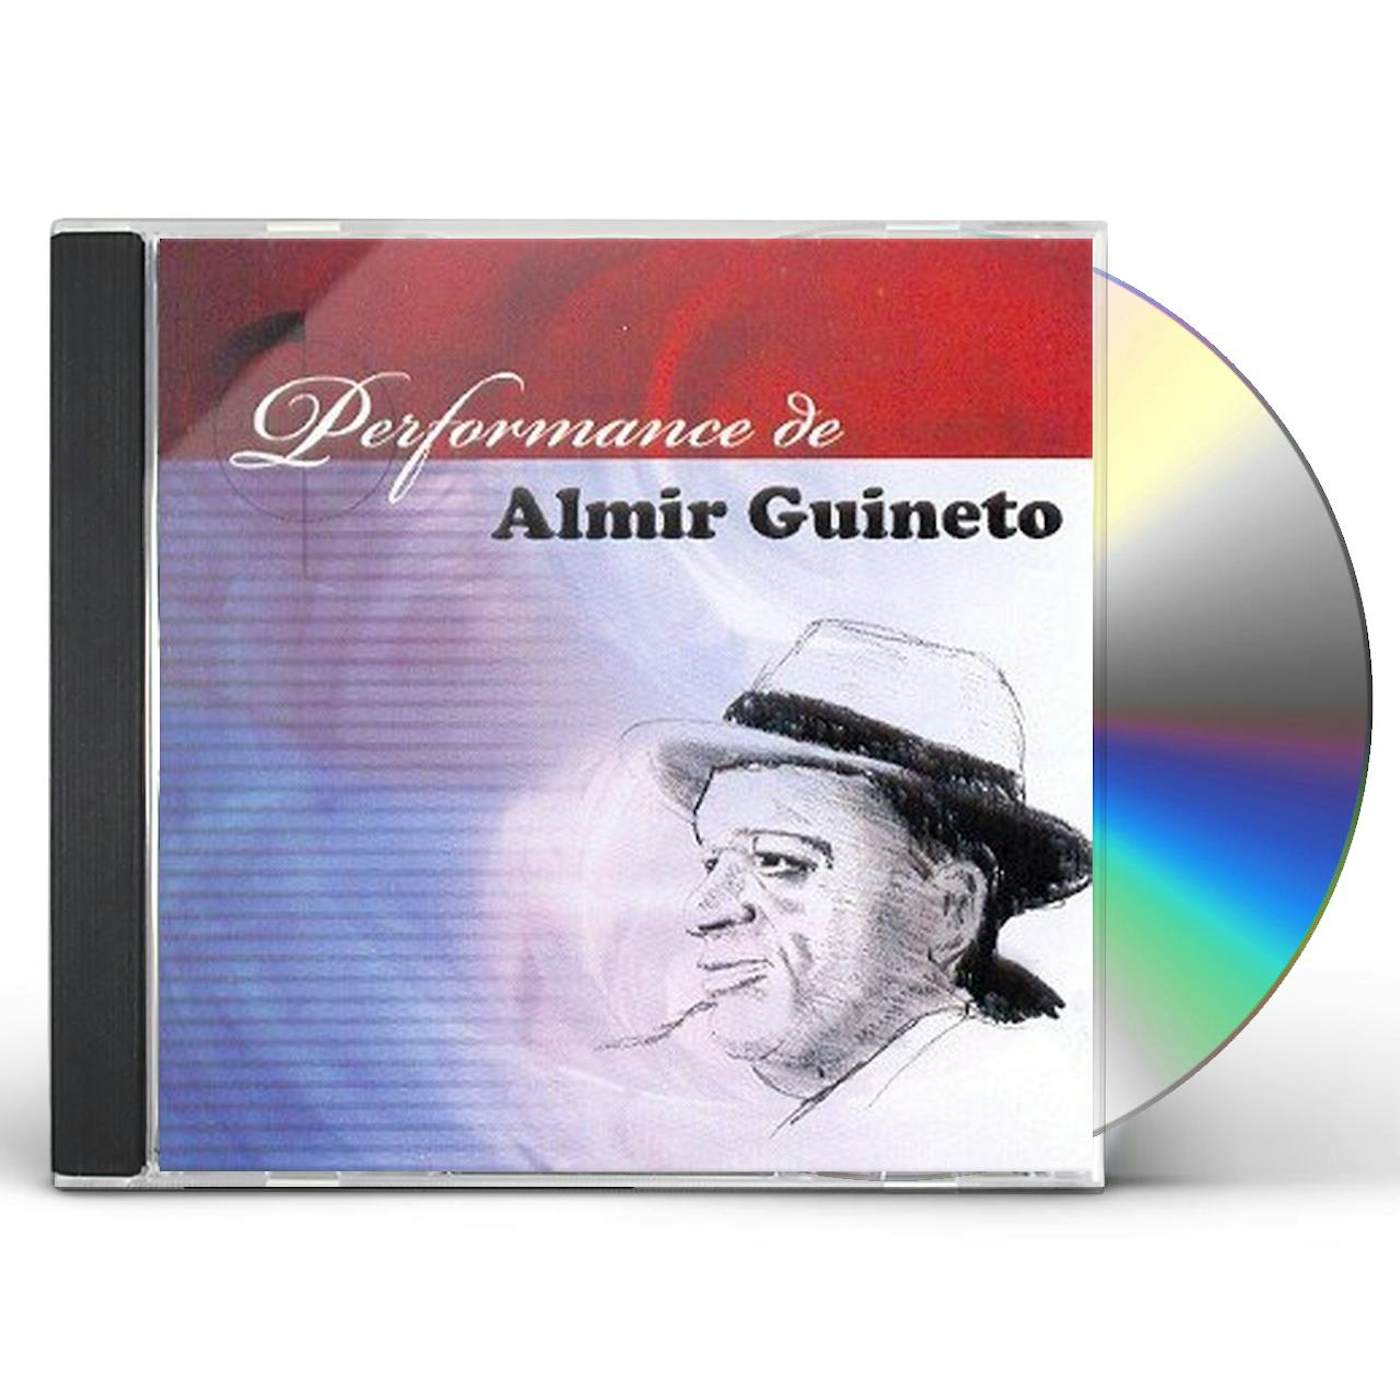 Almir Guineto PERFORMANCE DE CD